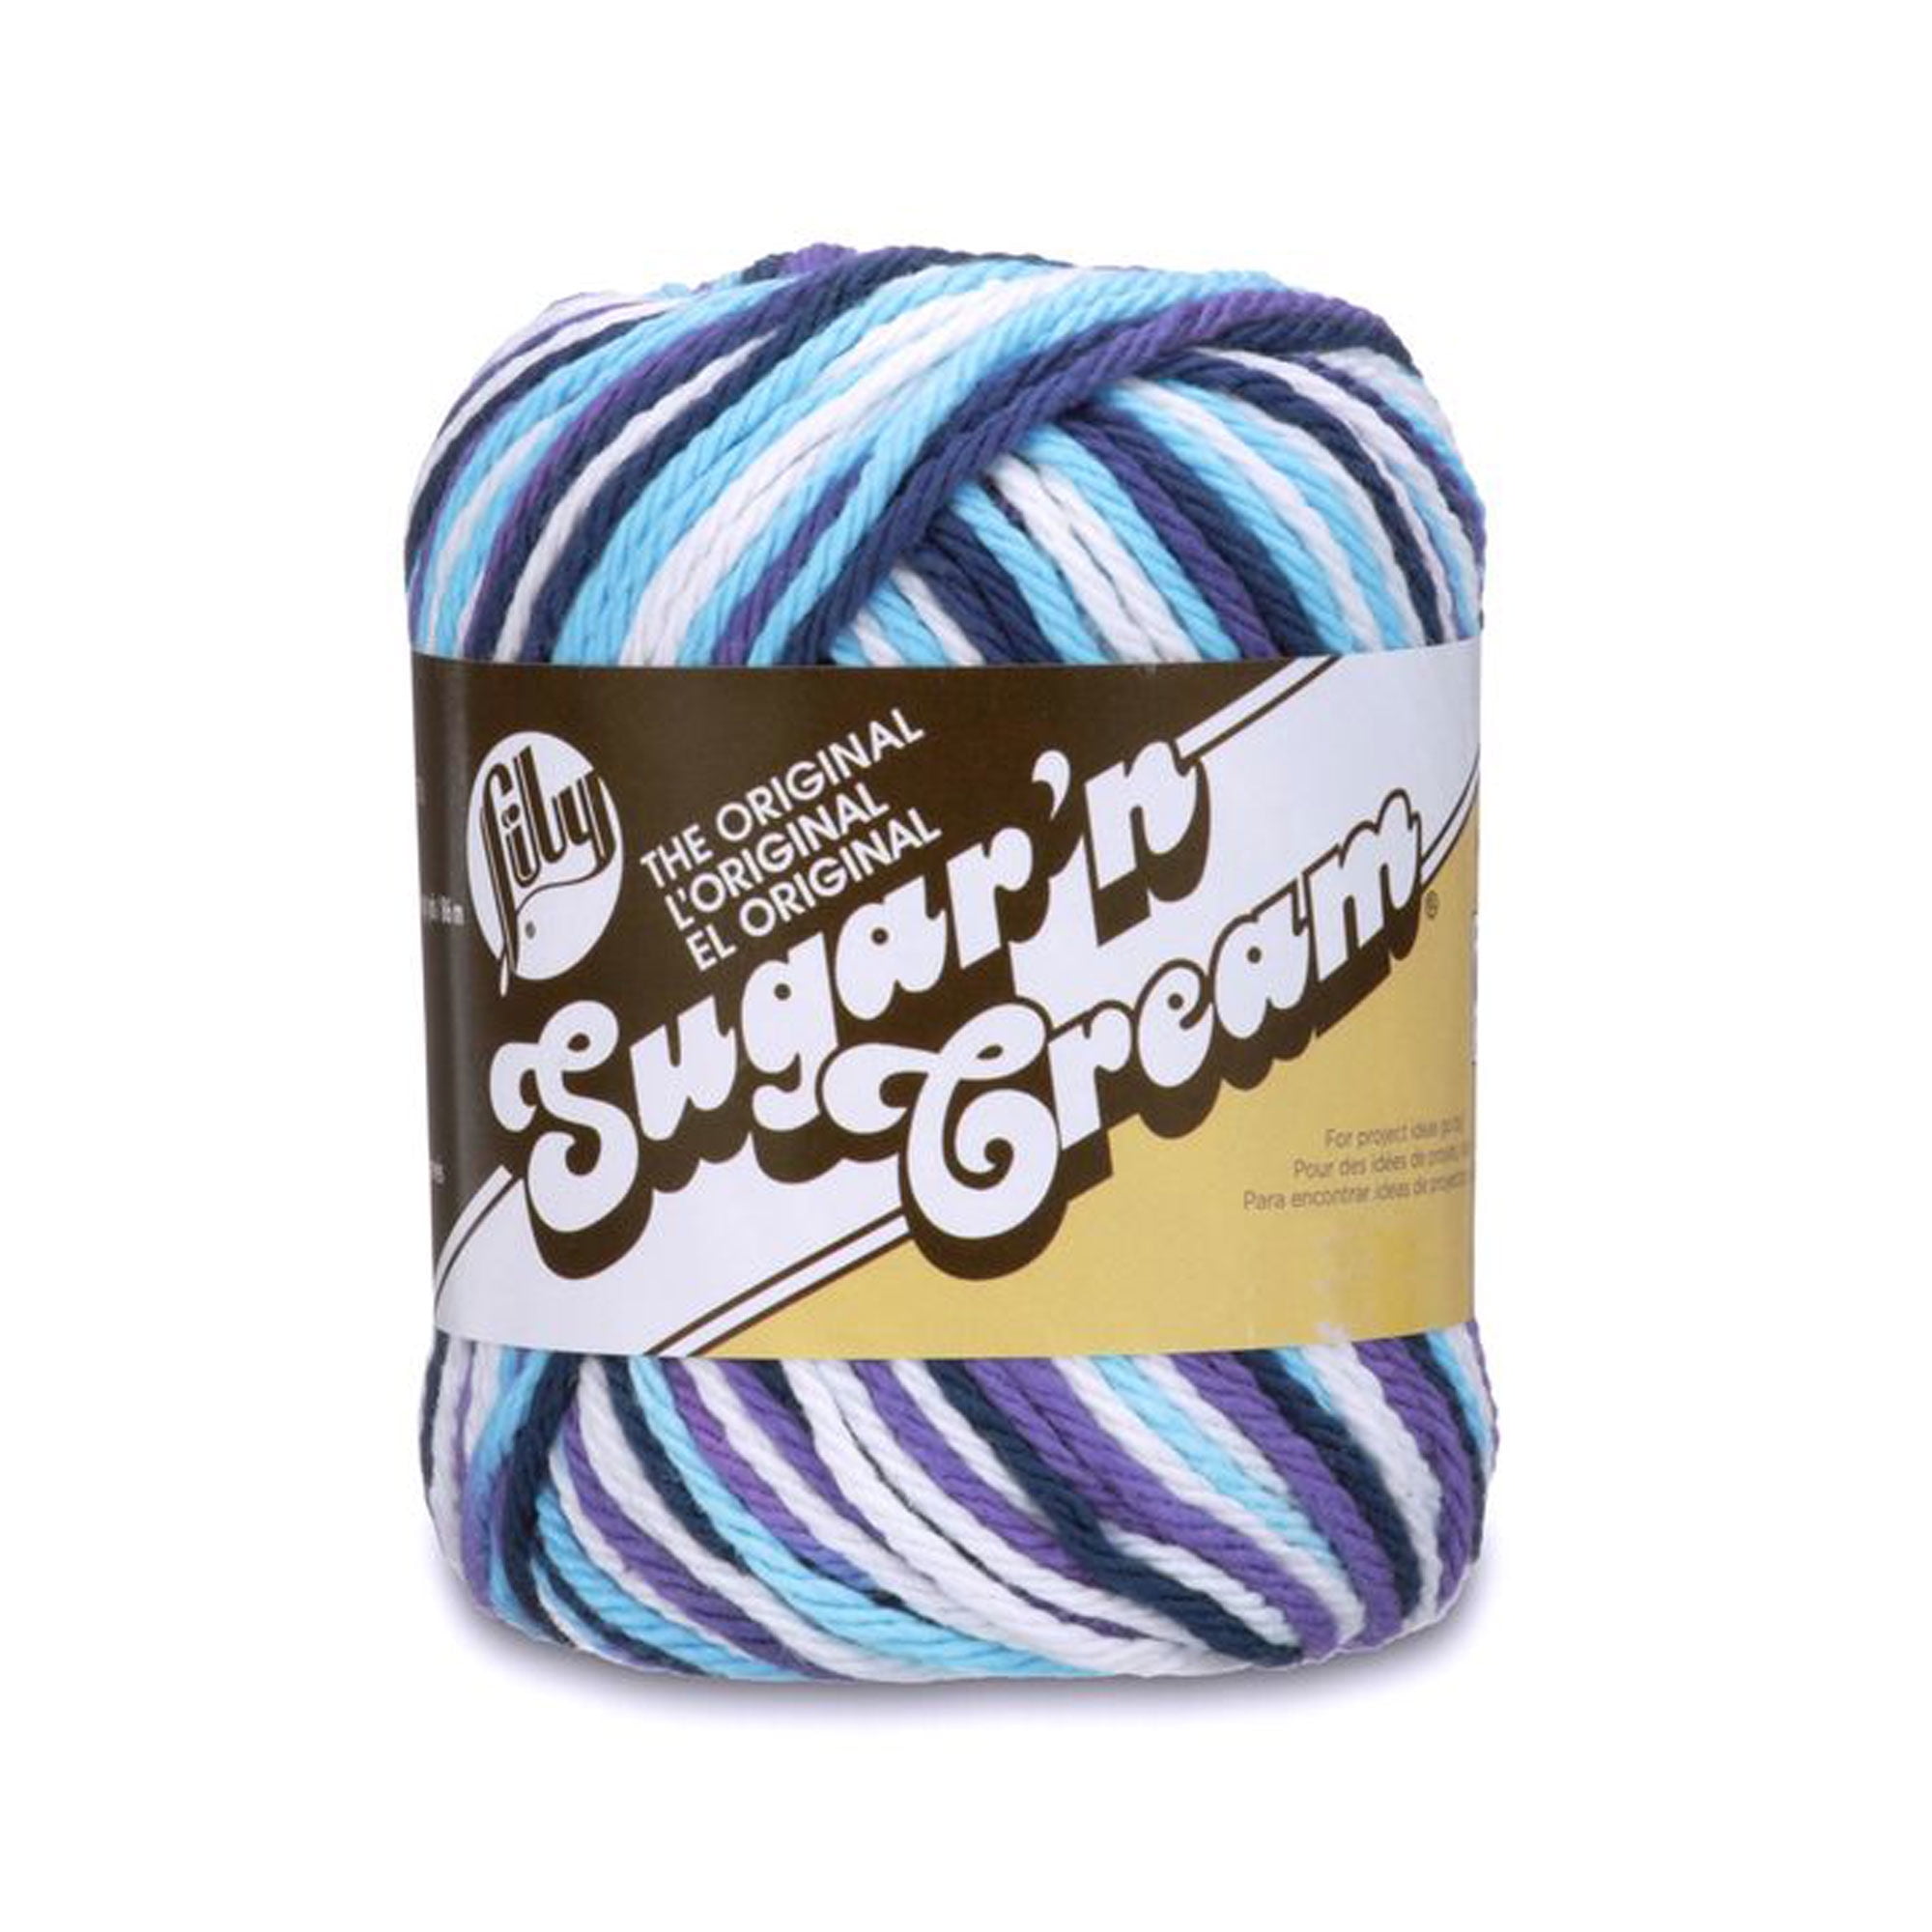 Cool Breeze Gauge 4 Medium Lily 10200200227 Sugar 'N Cream The Original Ombre Yarn 100% Cotton Machine Wash & Dry 2oz 